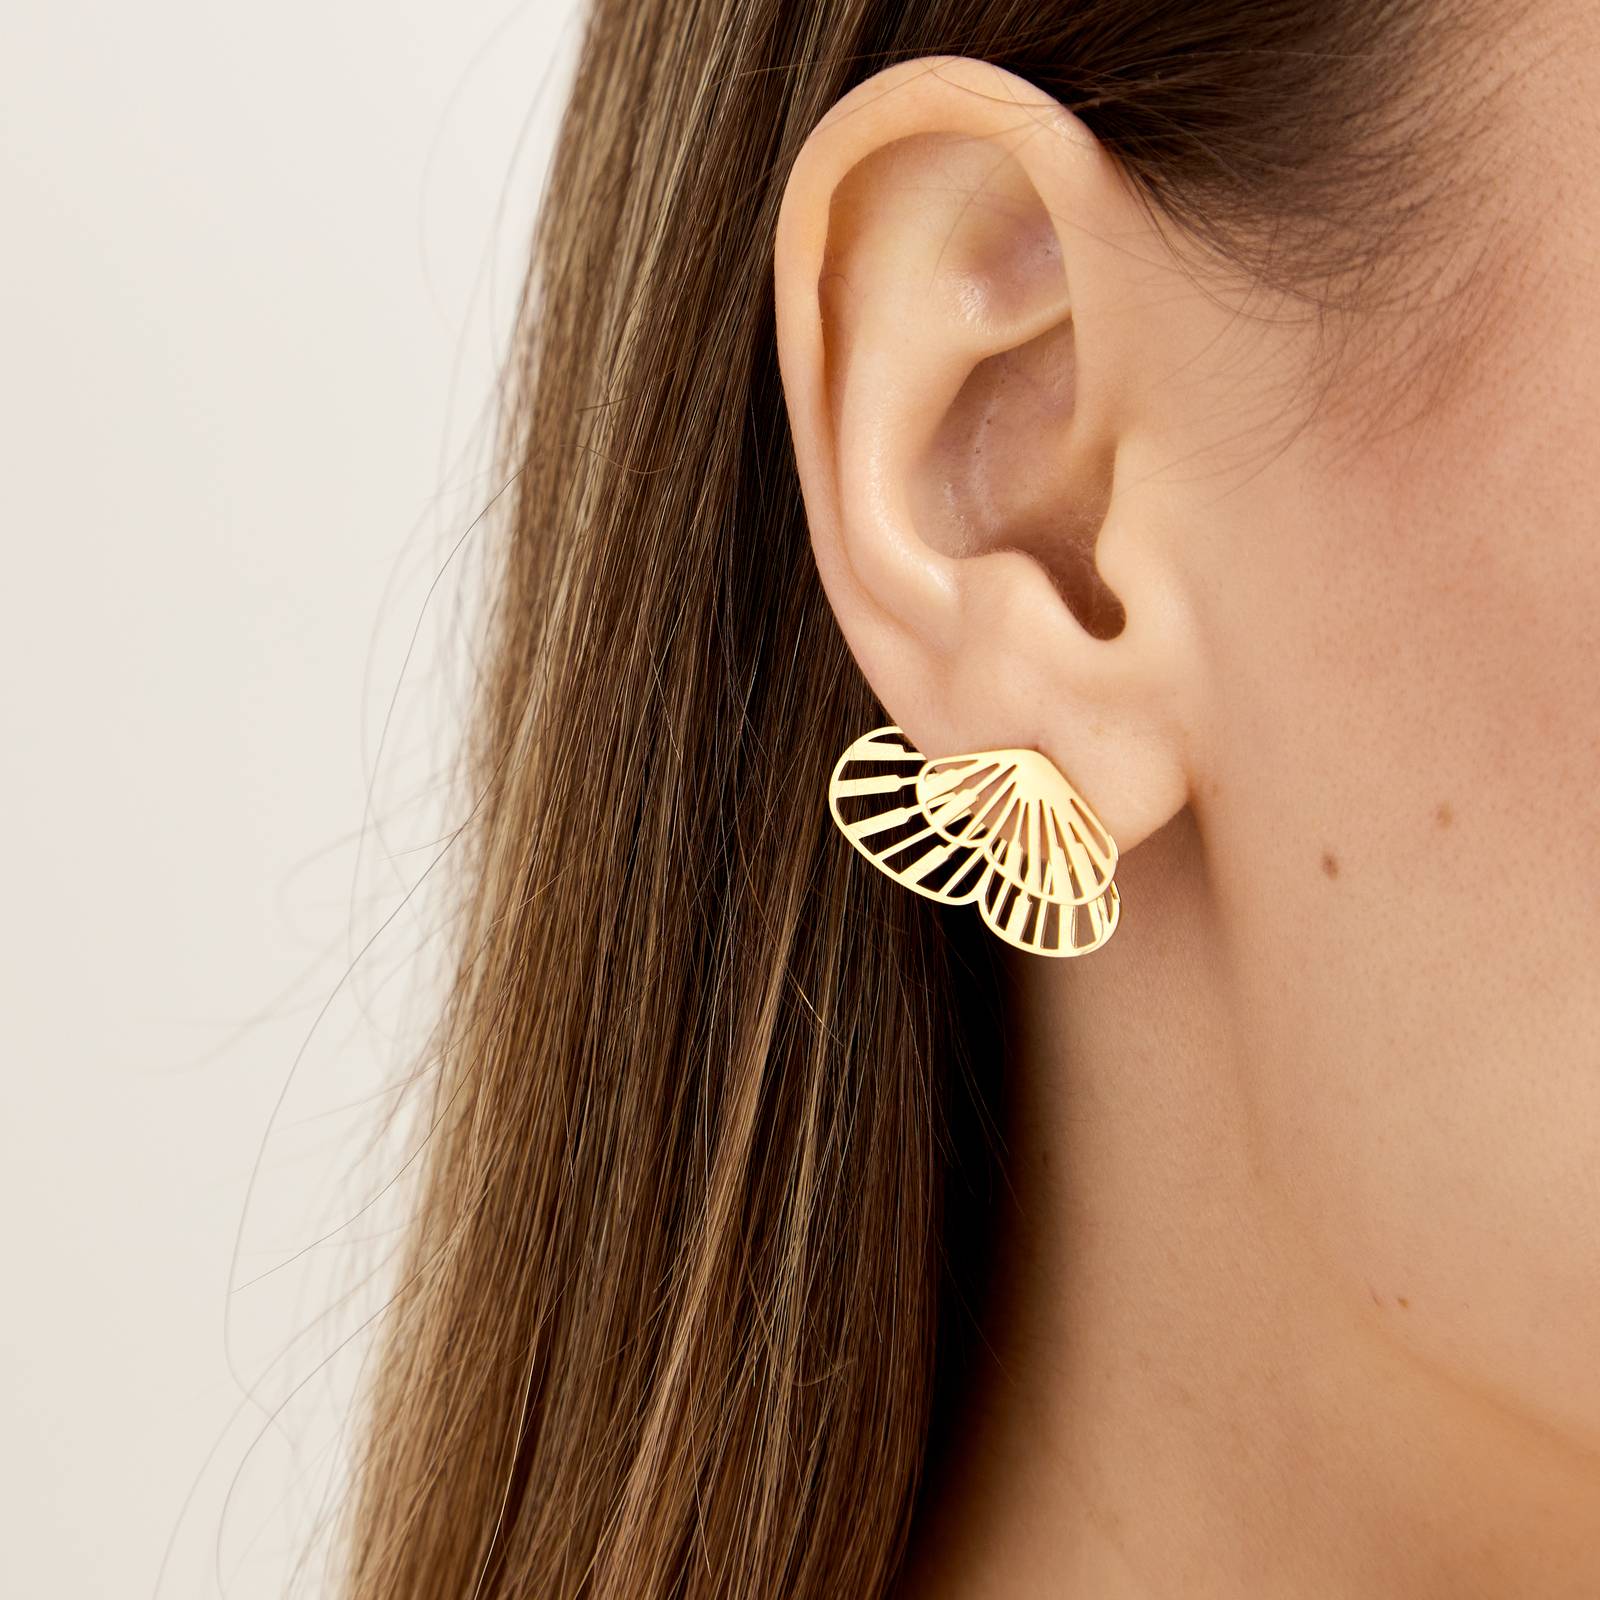 Gold plated Stainless steel Butterflies earrings